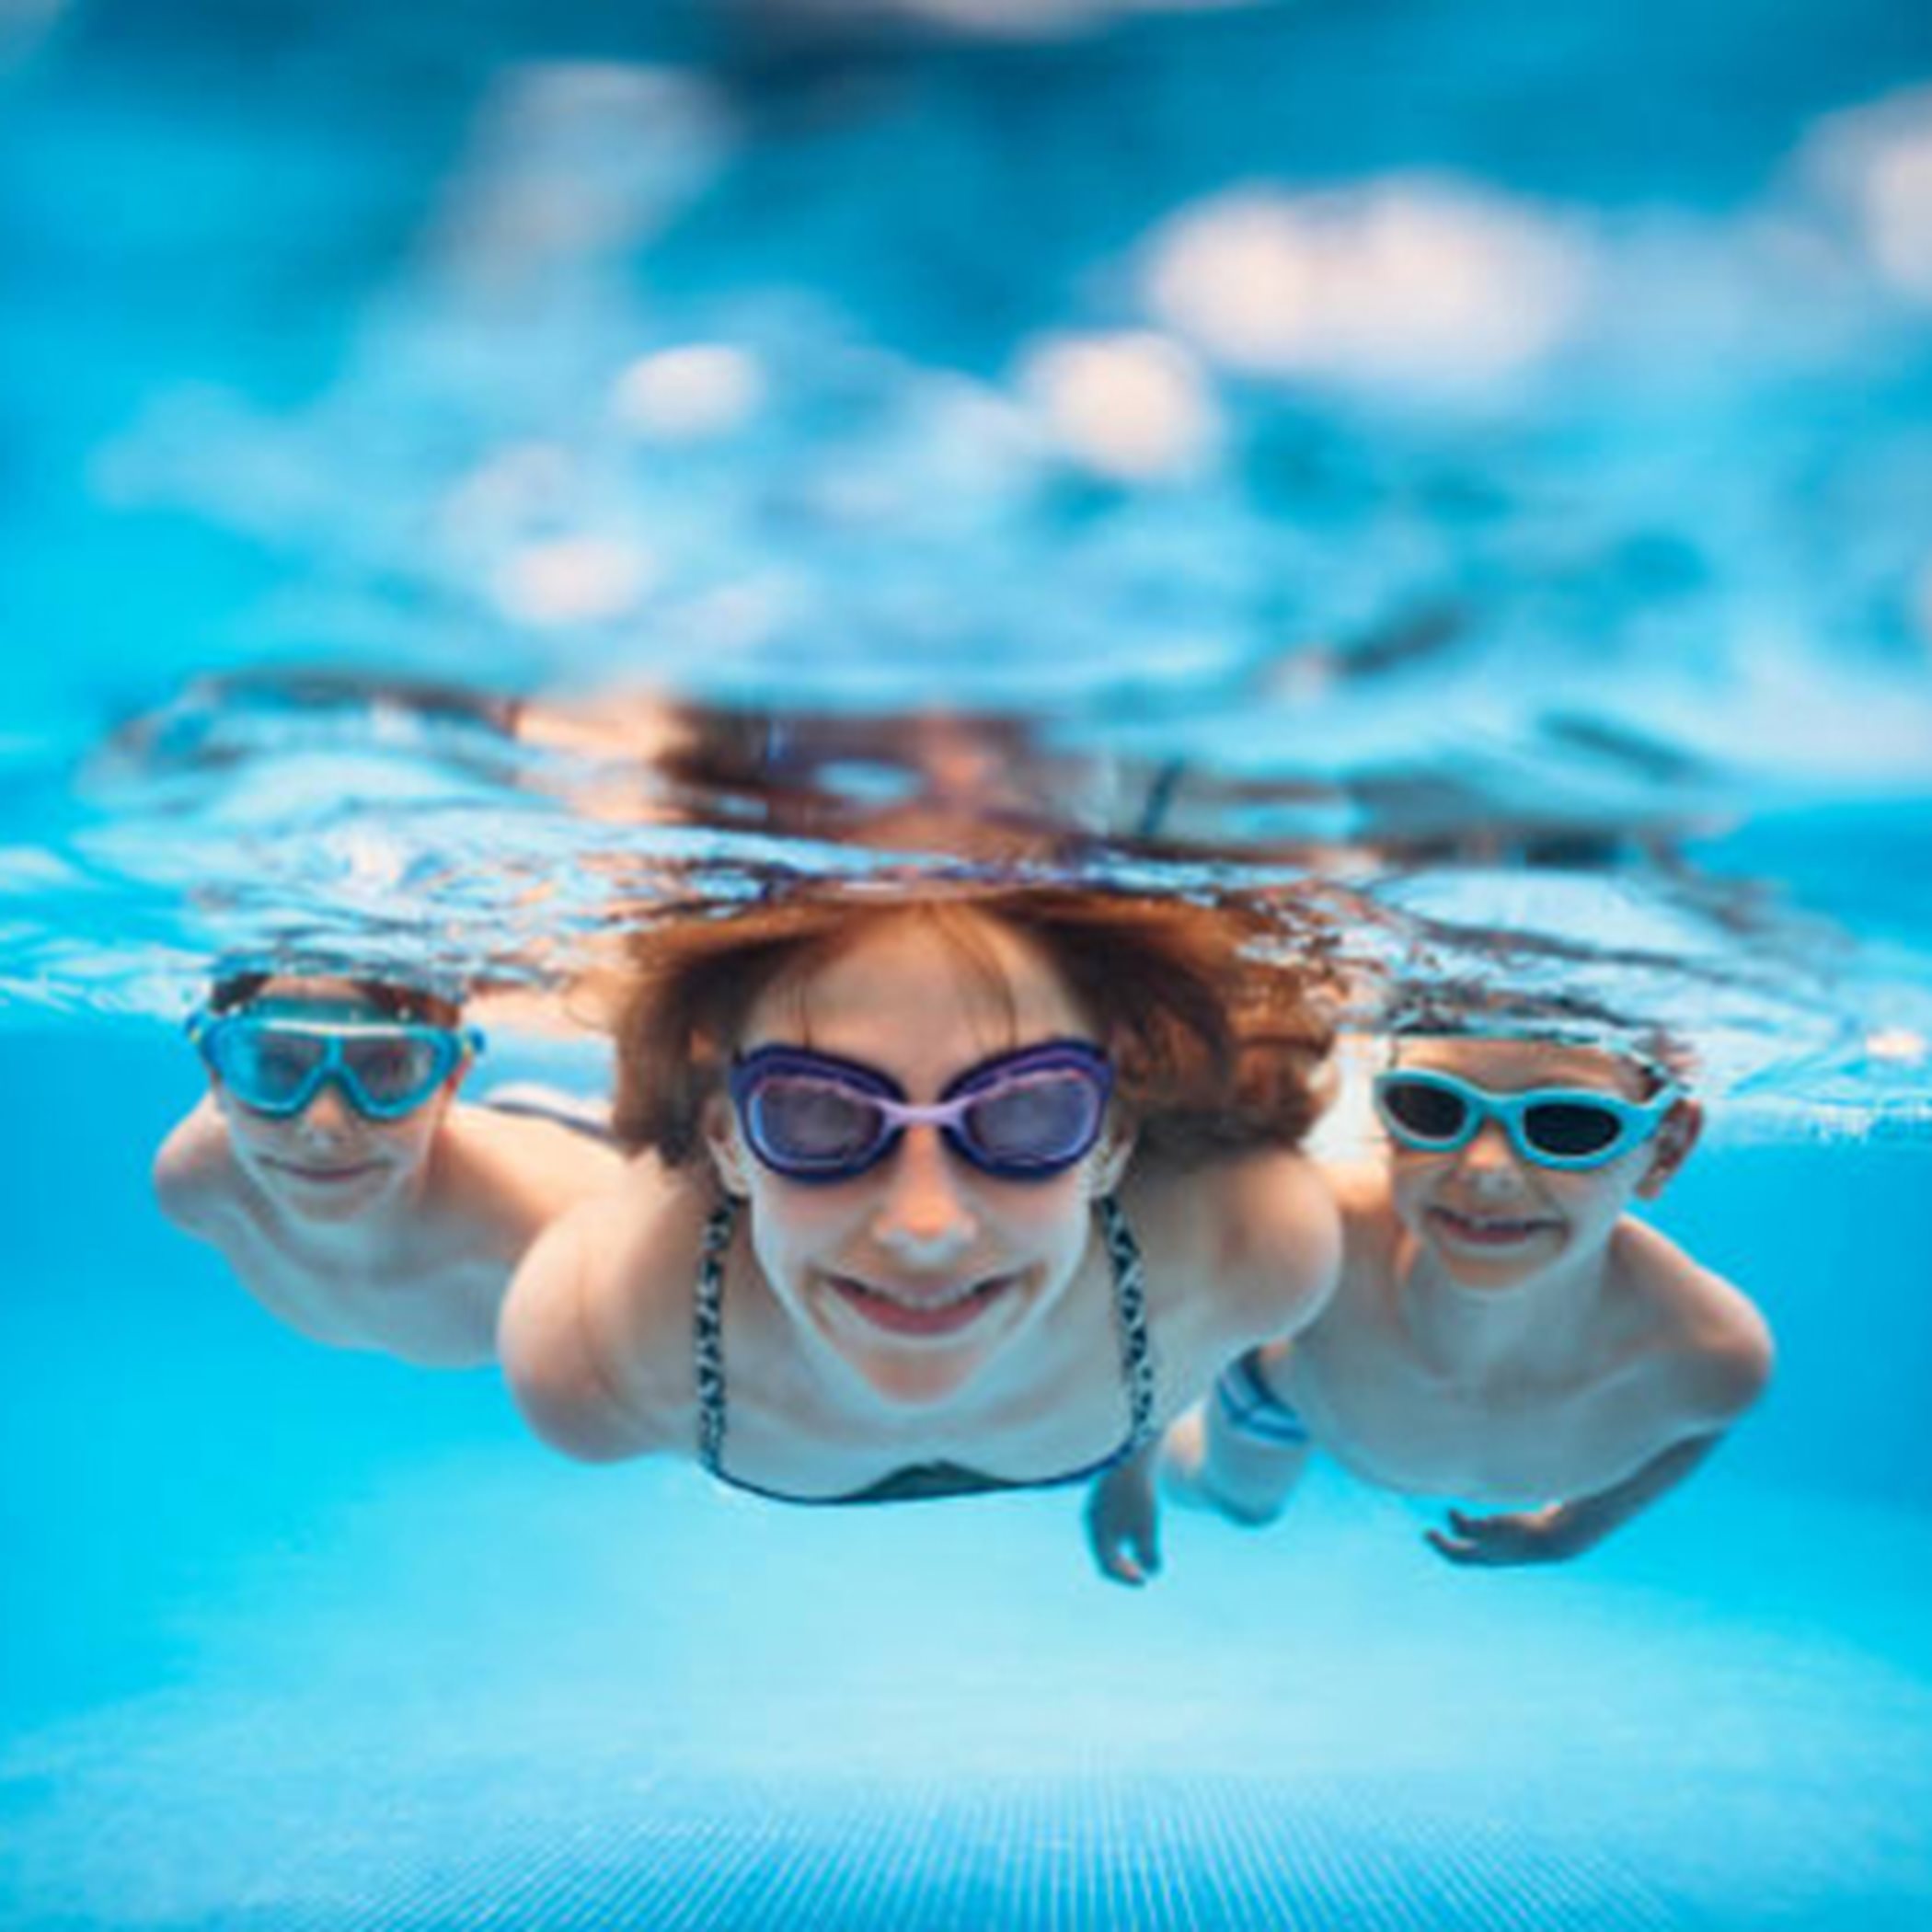 Three people swimming in a pool